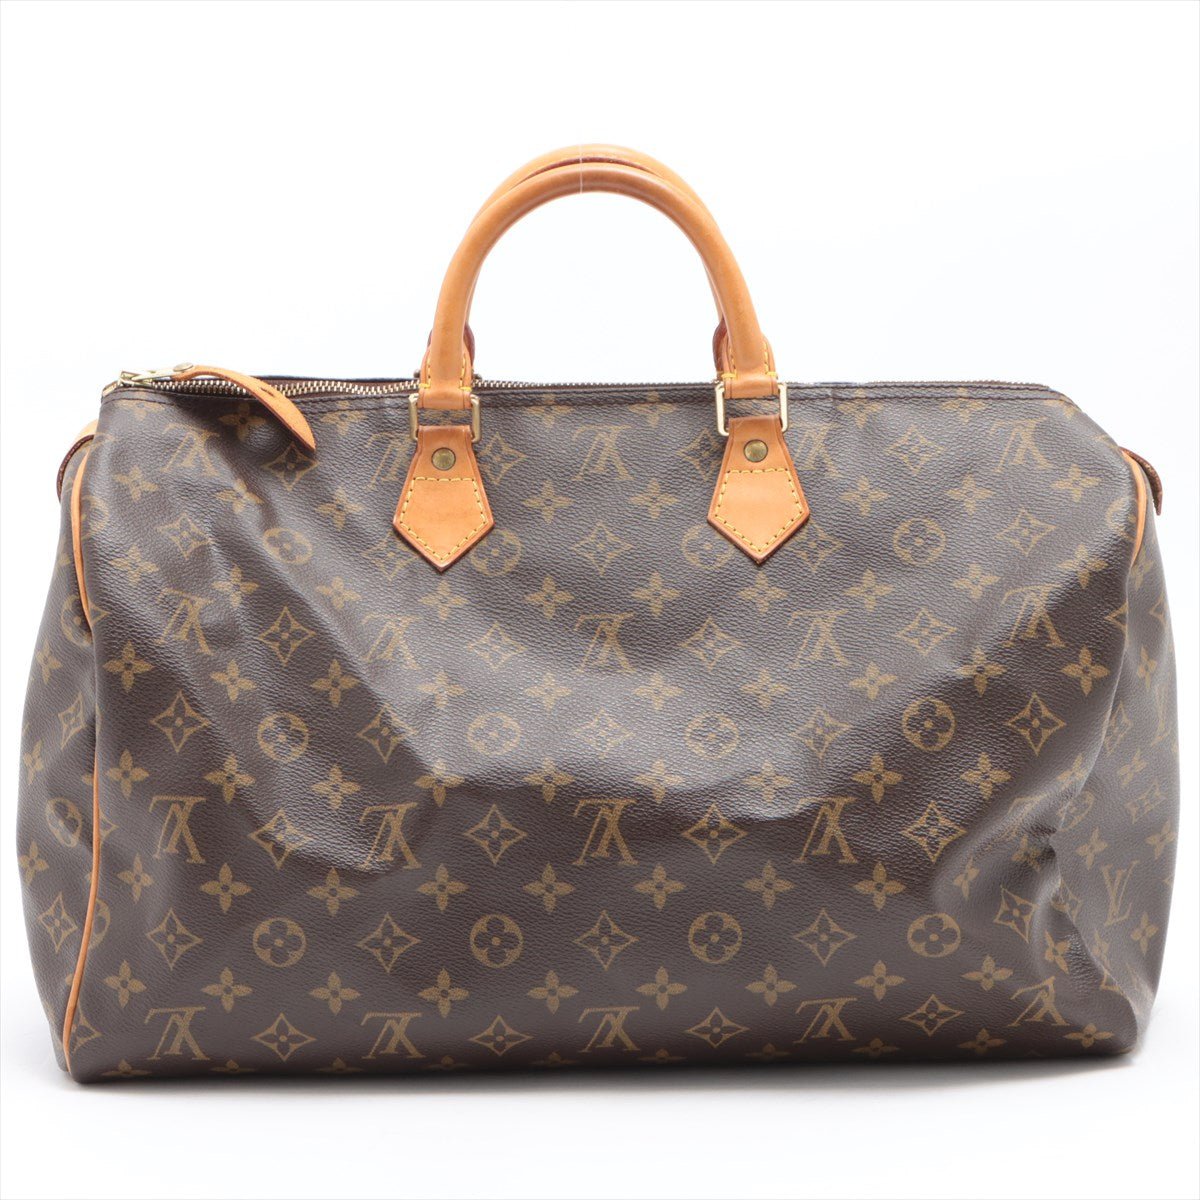 How to Authenticate a Louis Vuitton Handbag  YouTube